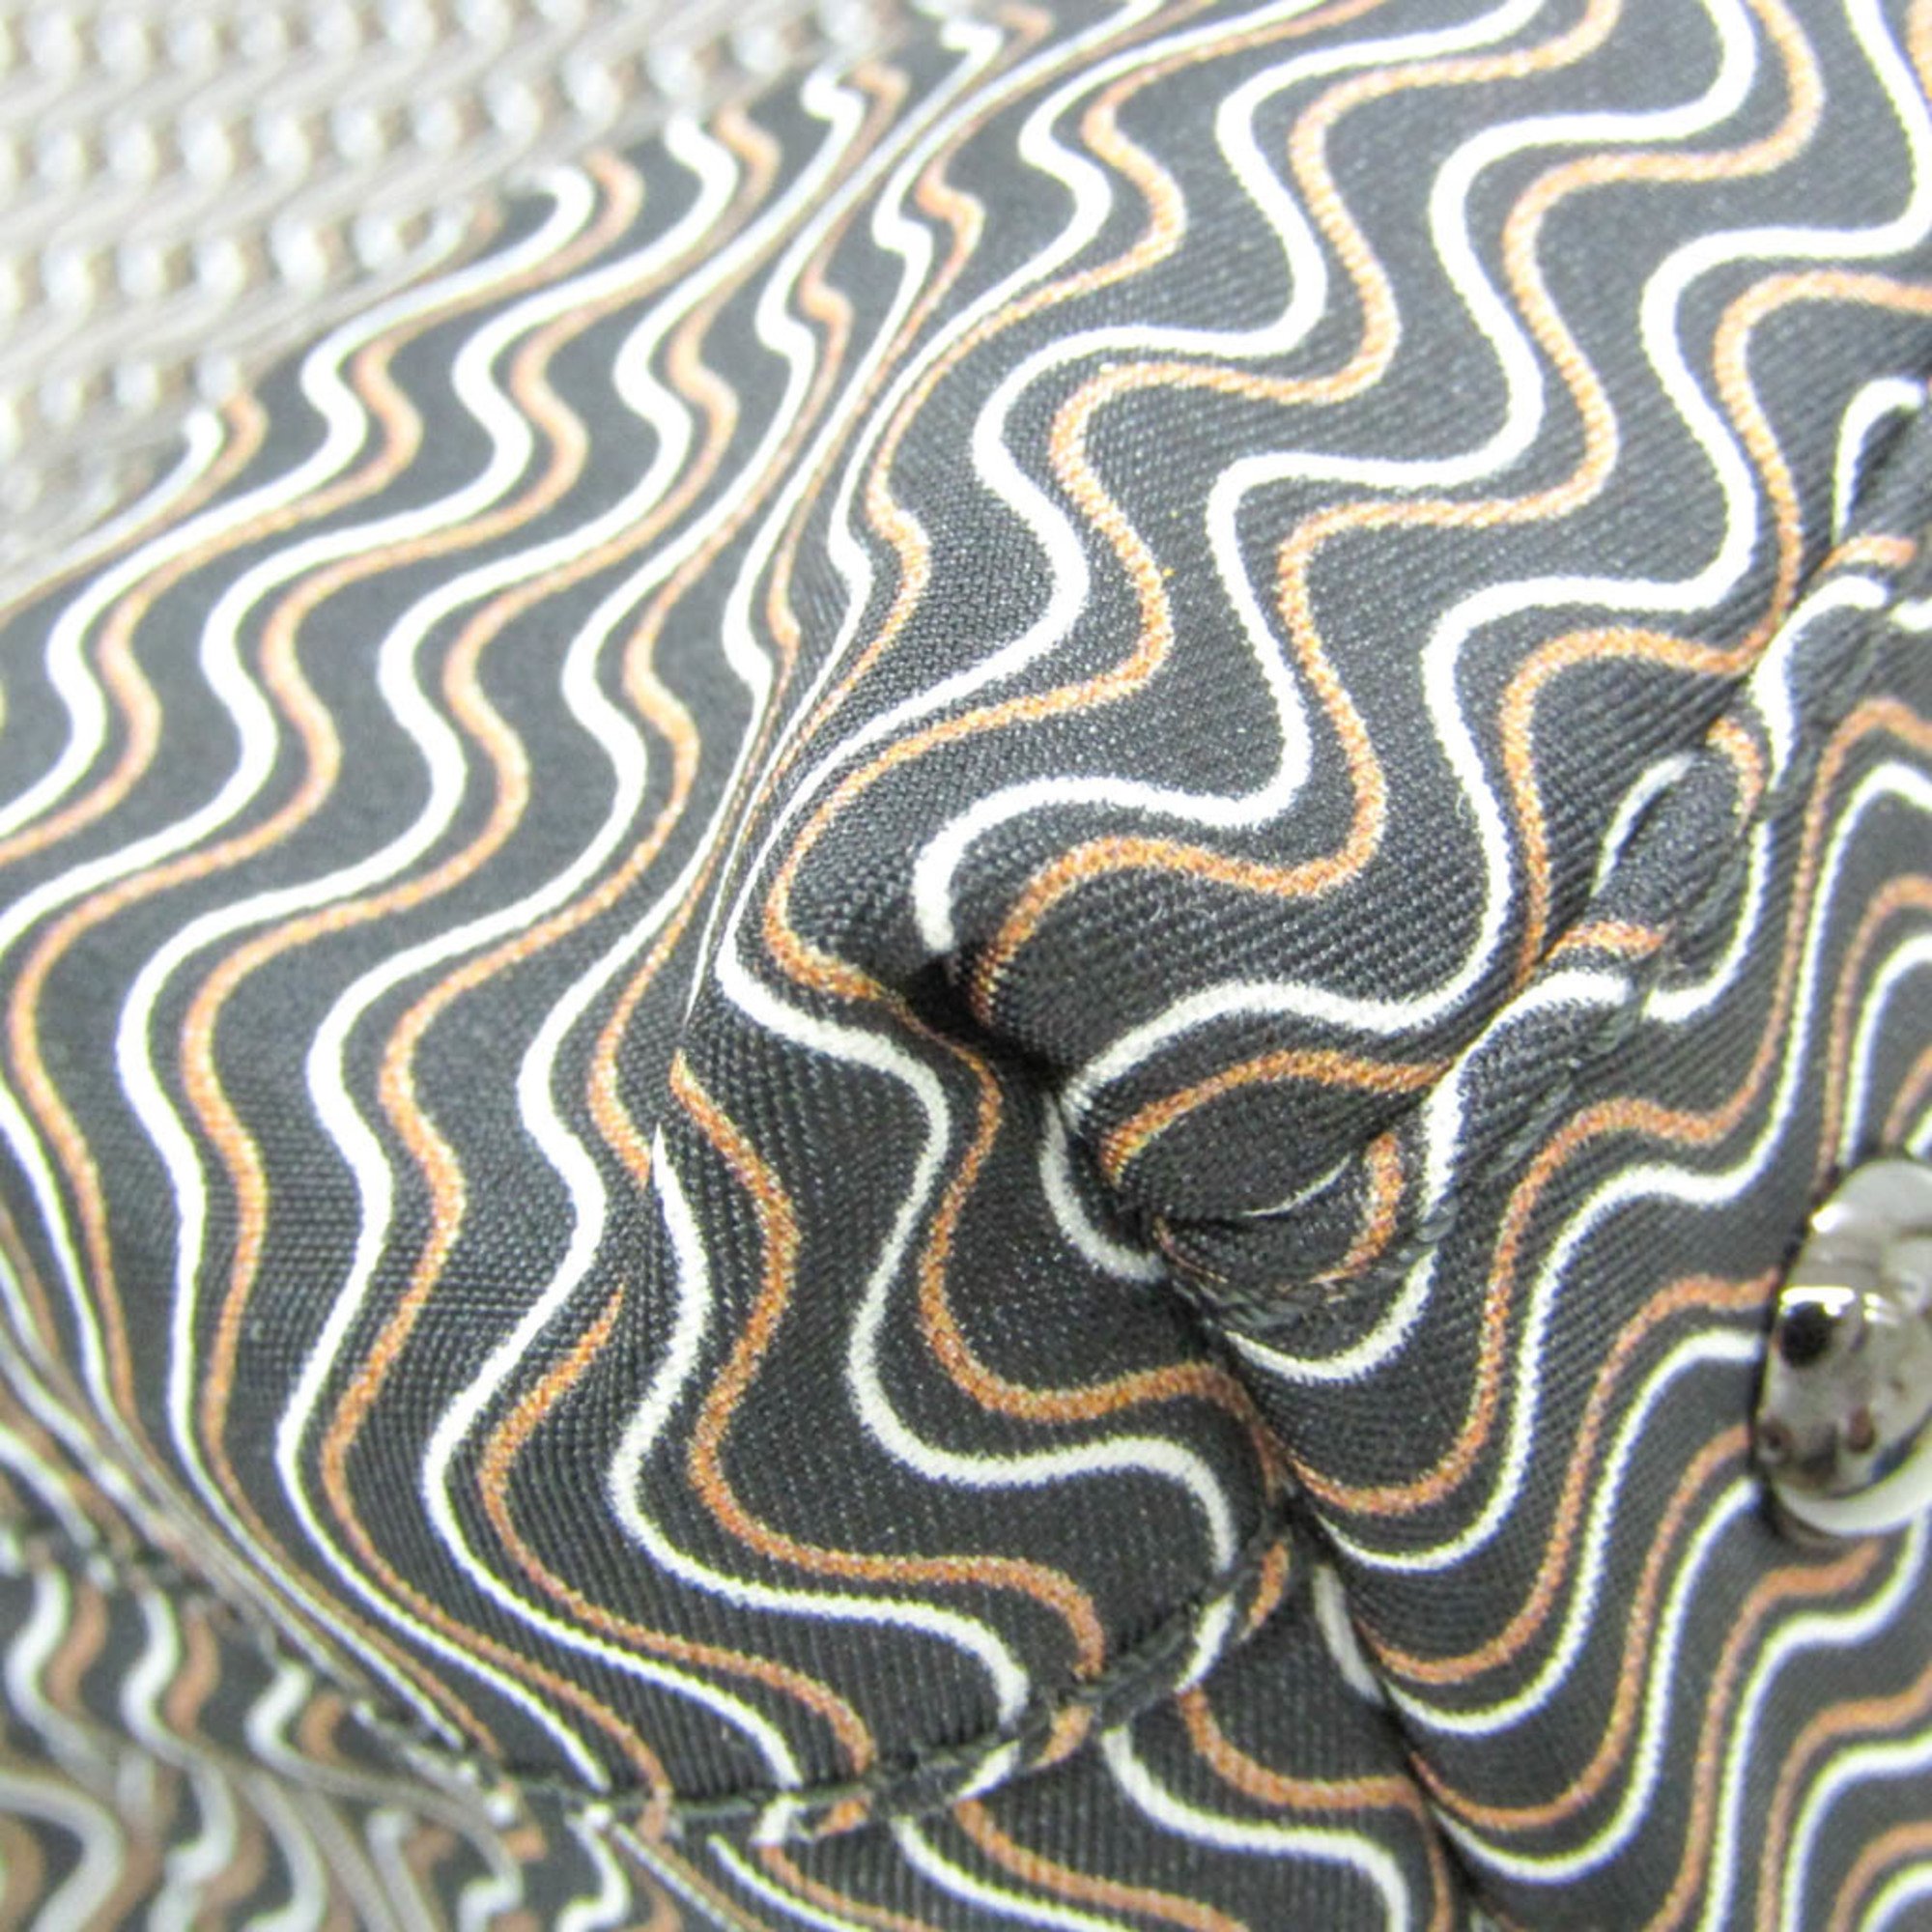 Zanellato Wave Pattern Postina Women's Leather,Nylon Handbag,Shoulder Bag Black,Brown,White